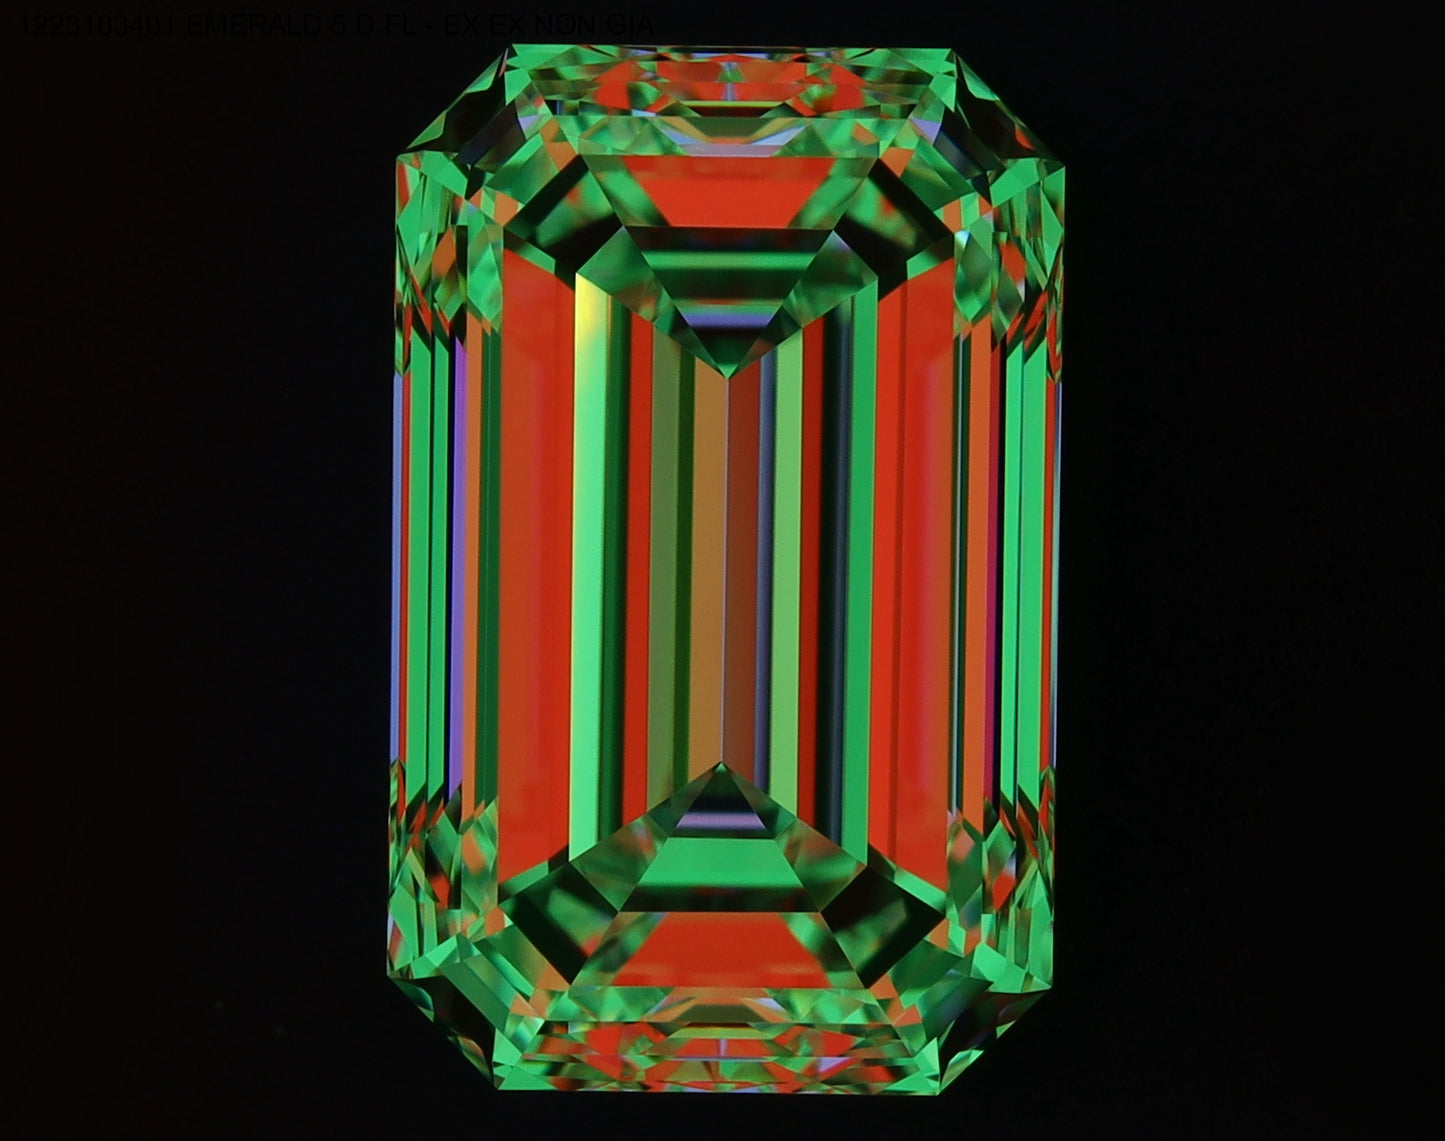 Exceptional 5.00-Carat Emerald-Cut Diamond - Splendid Shine from South Africa